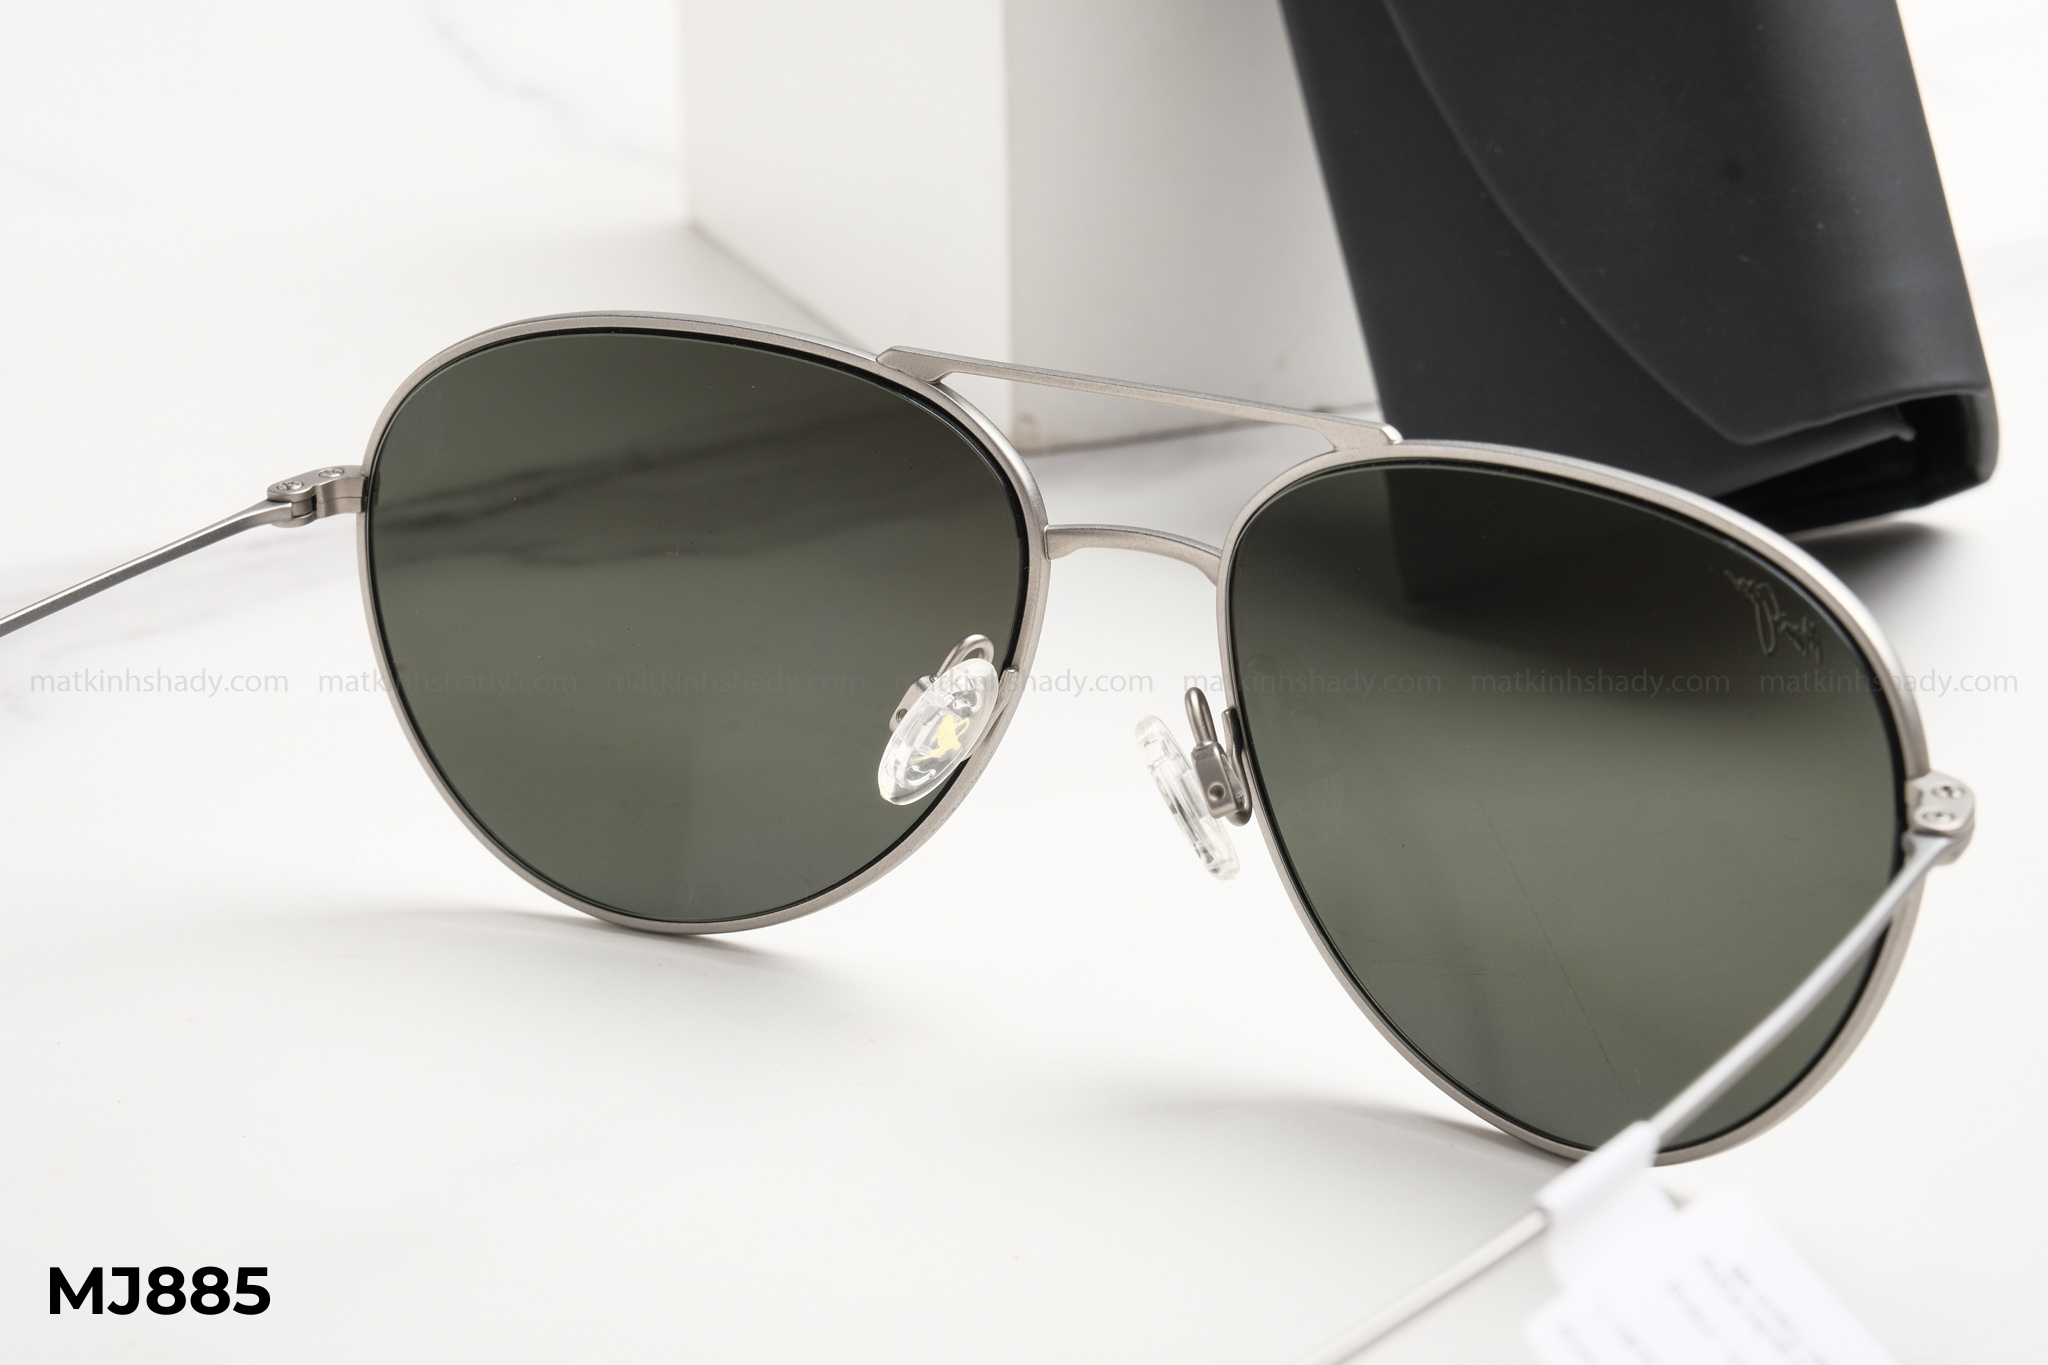  Maui Jim Eyewear - Sunglasses - MJ885 